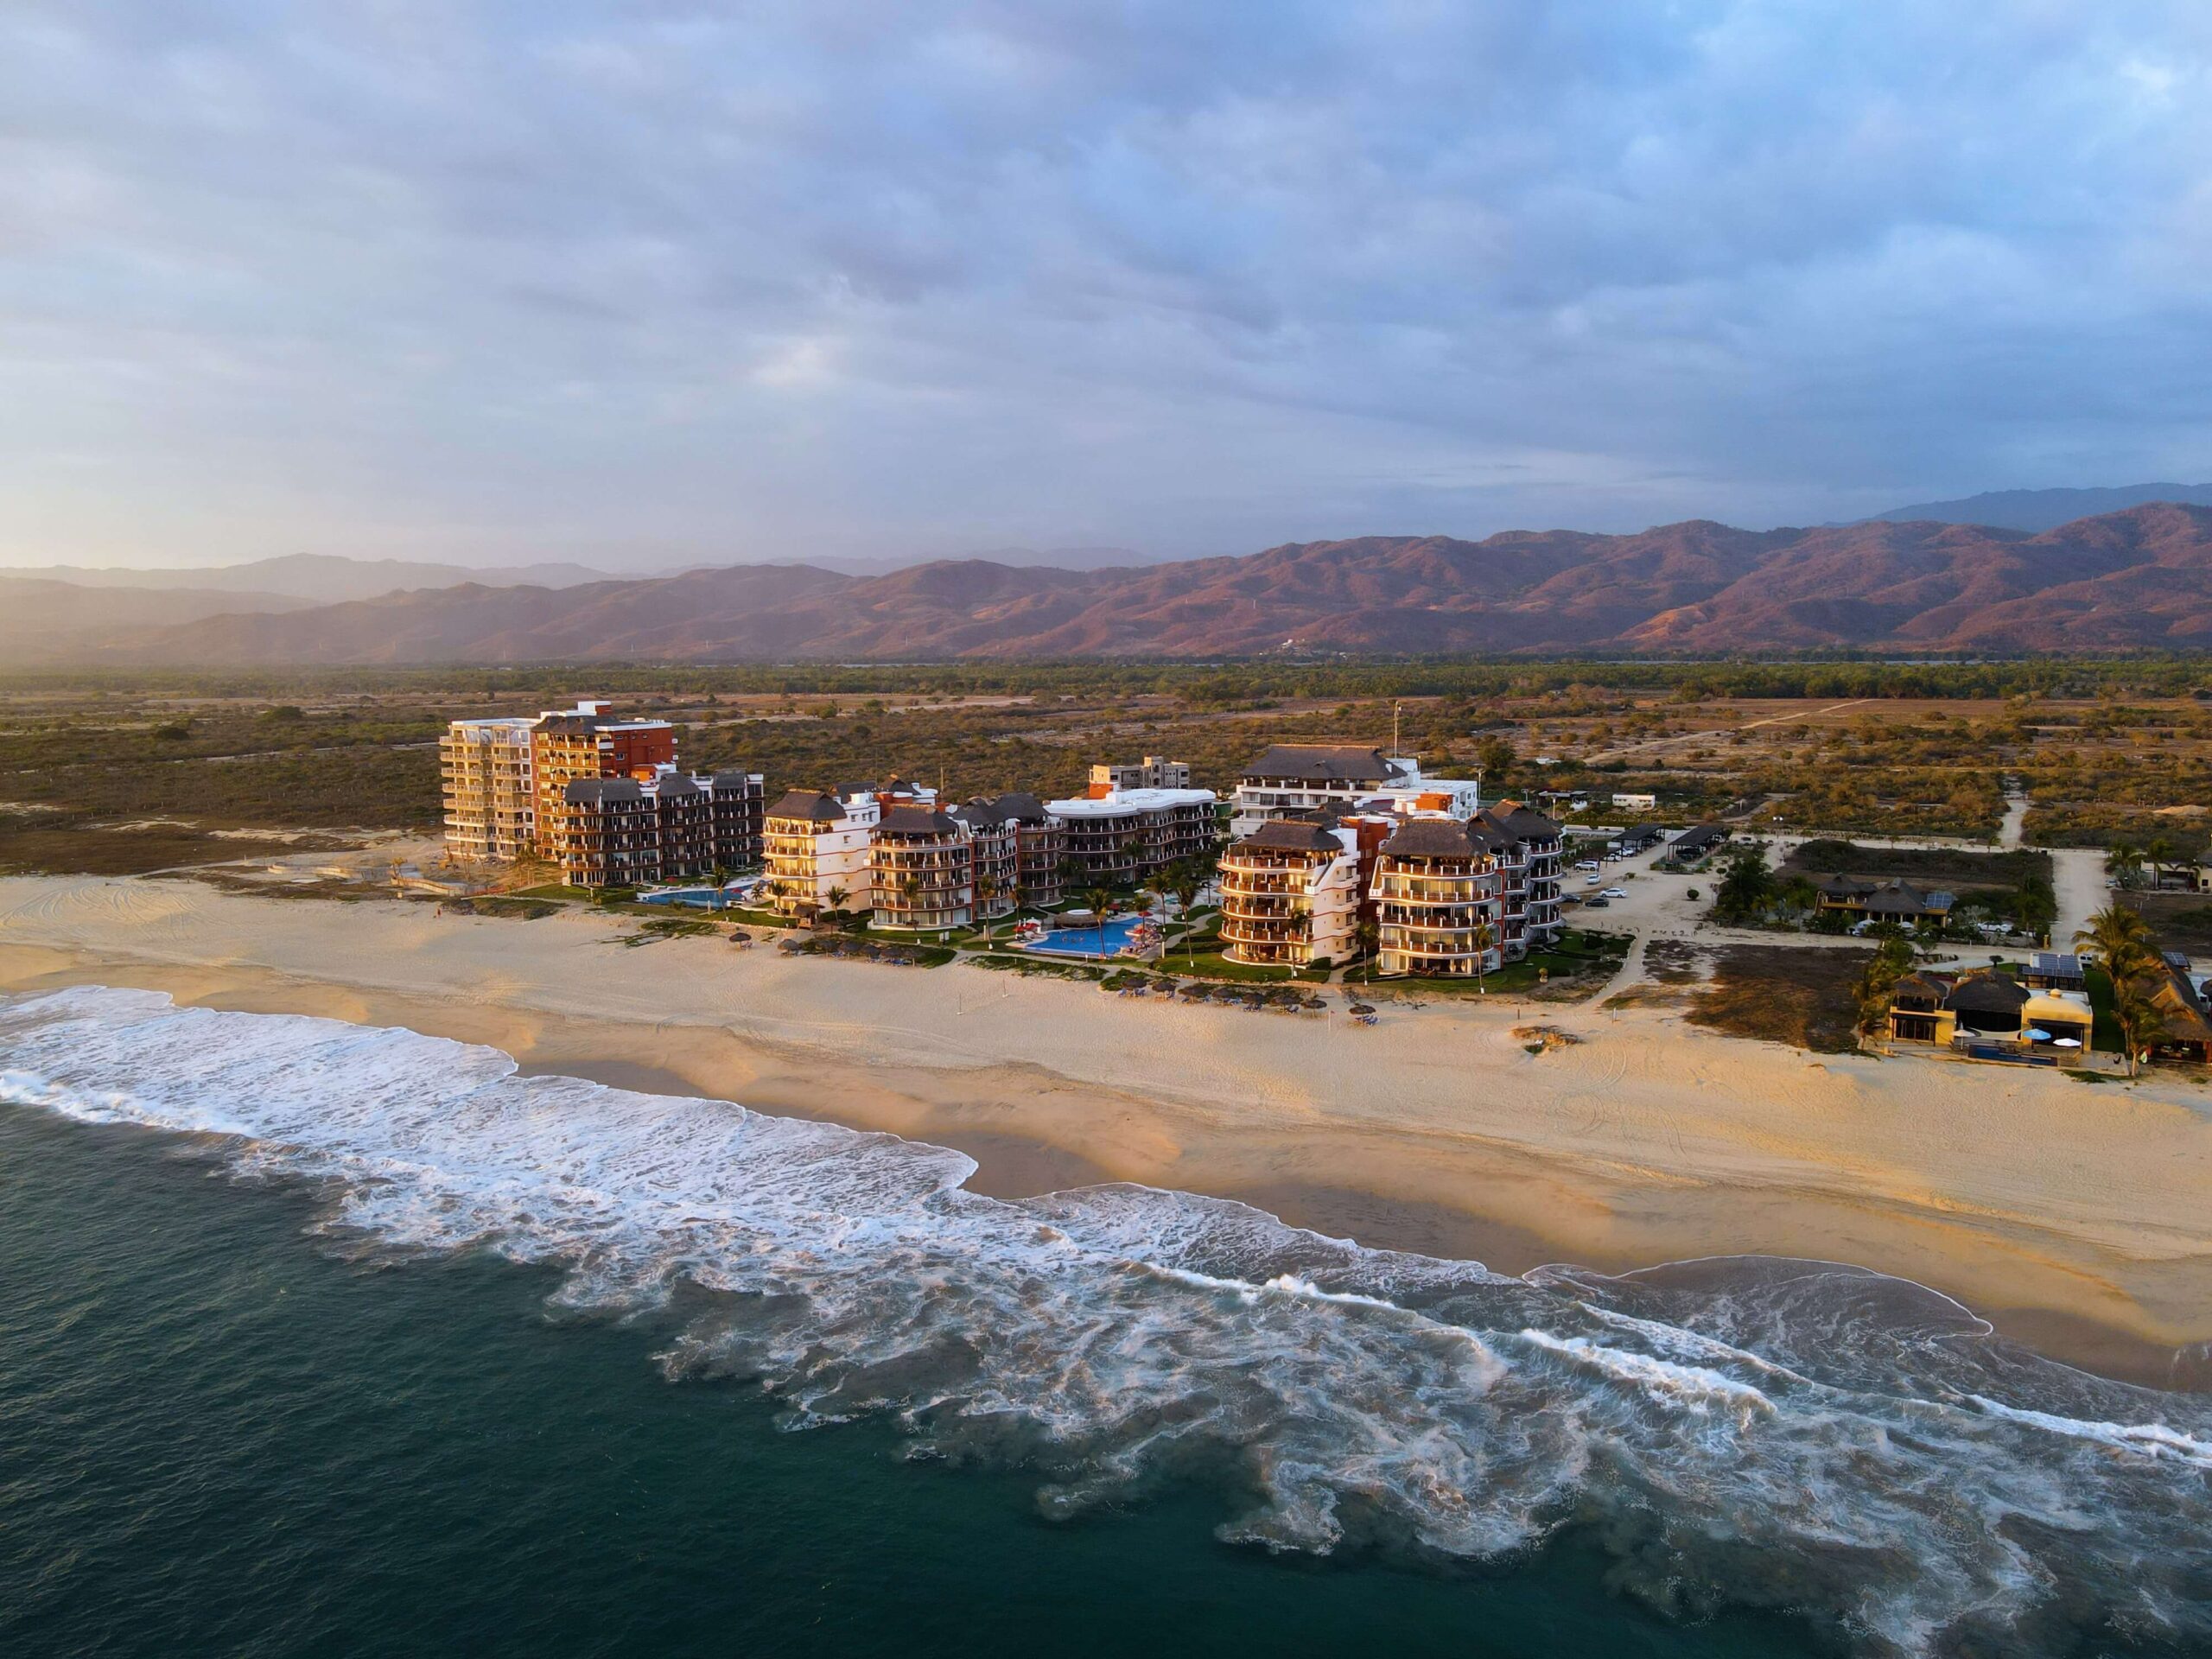 The Best Hotels In Puerto Escondido - Puerto Escondido Guide